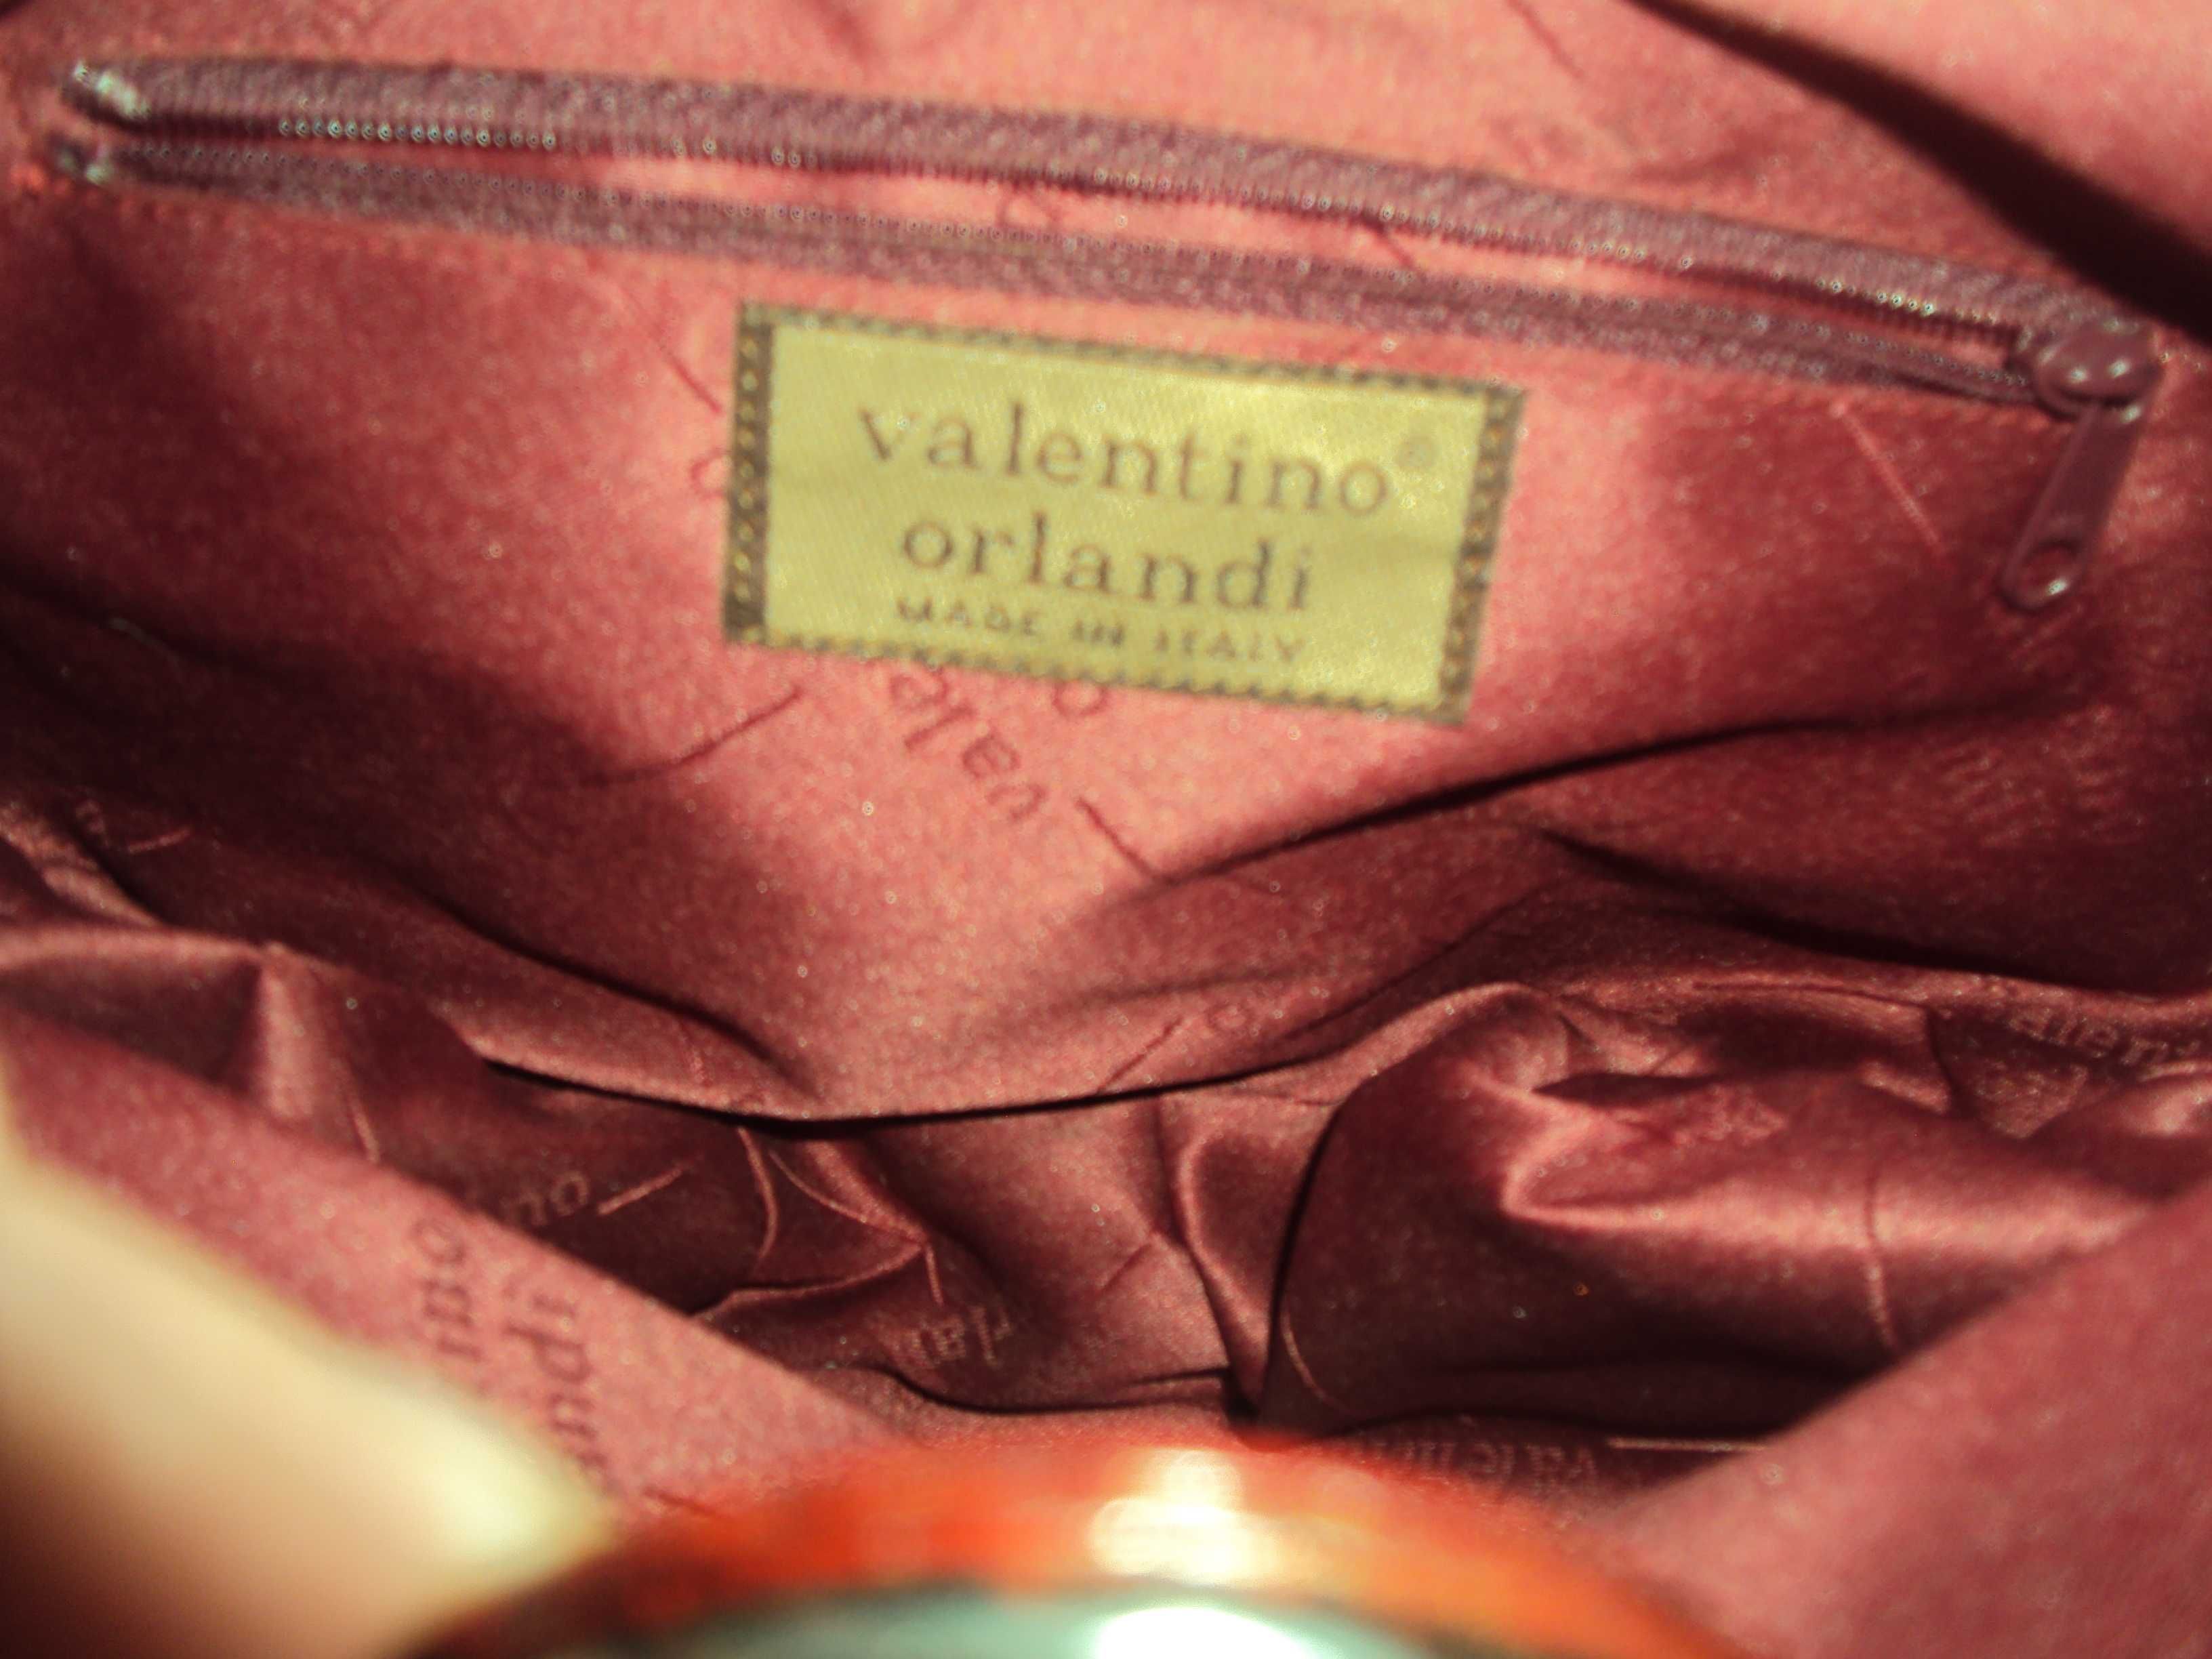 сумка кожаная винтажная Valentino Orlandi италия